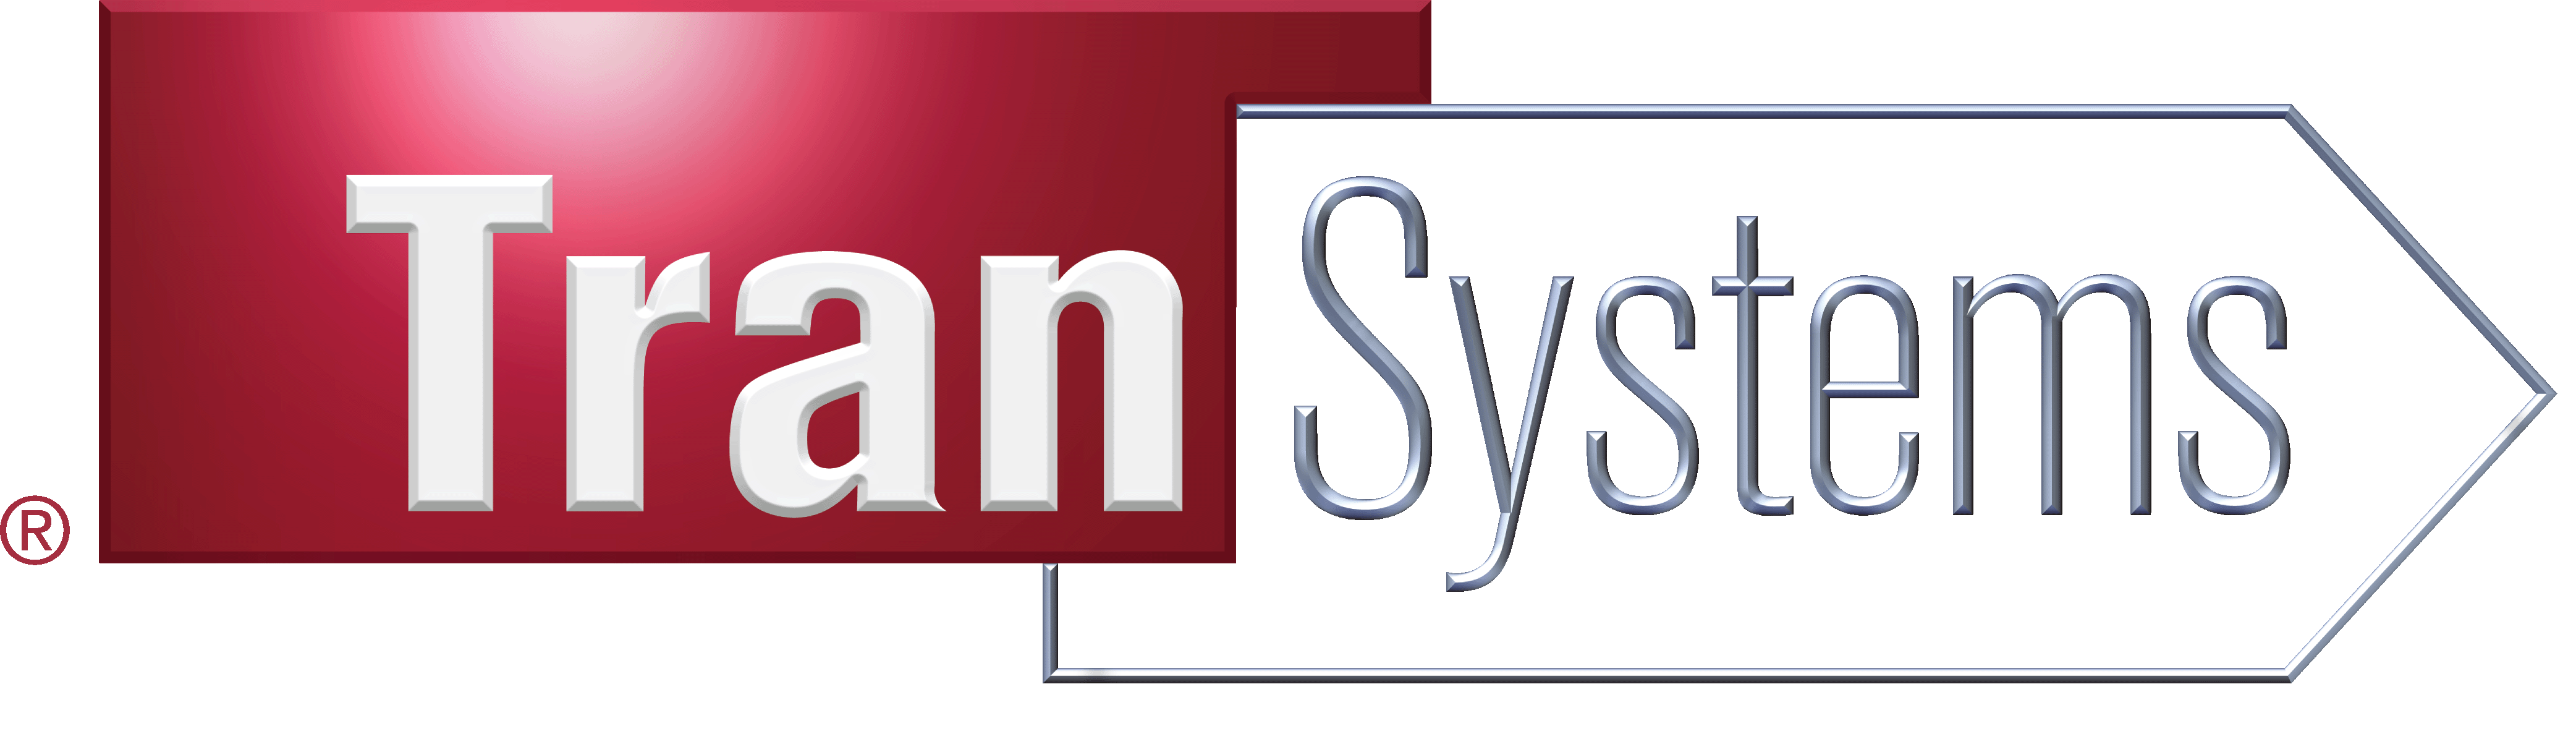 Abilio Systems Logo photo - 1